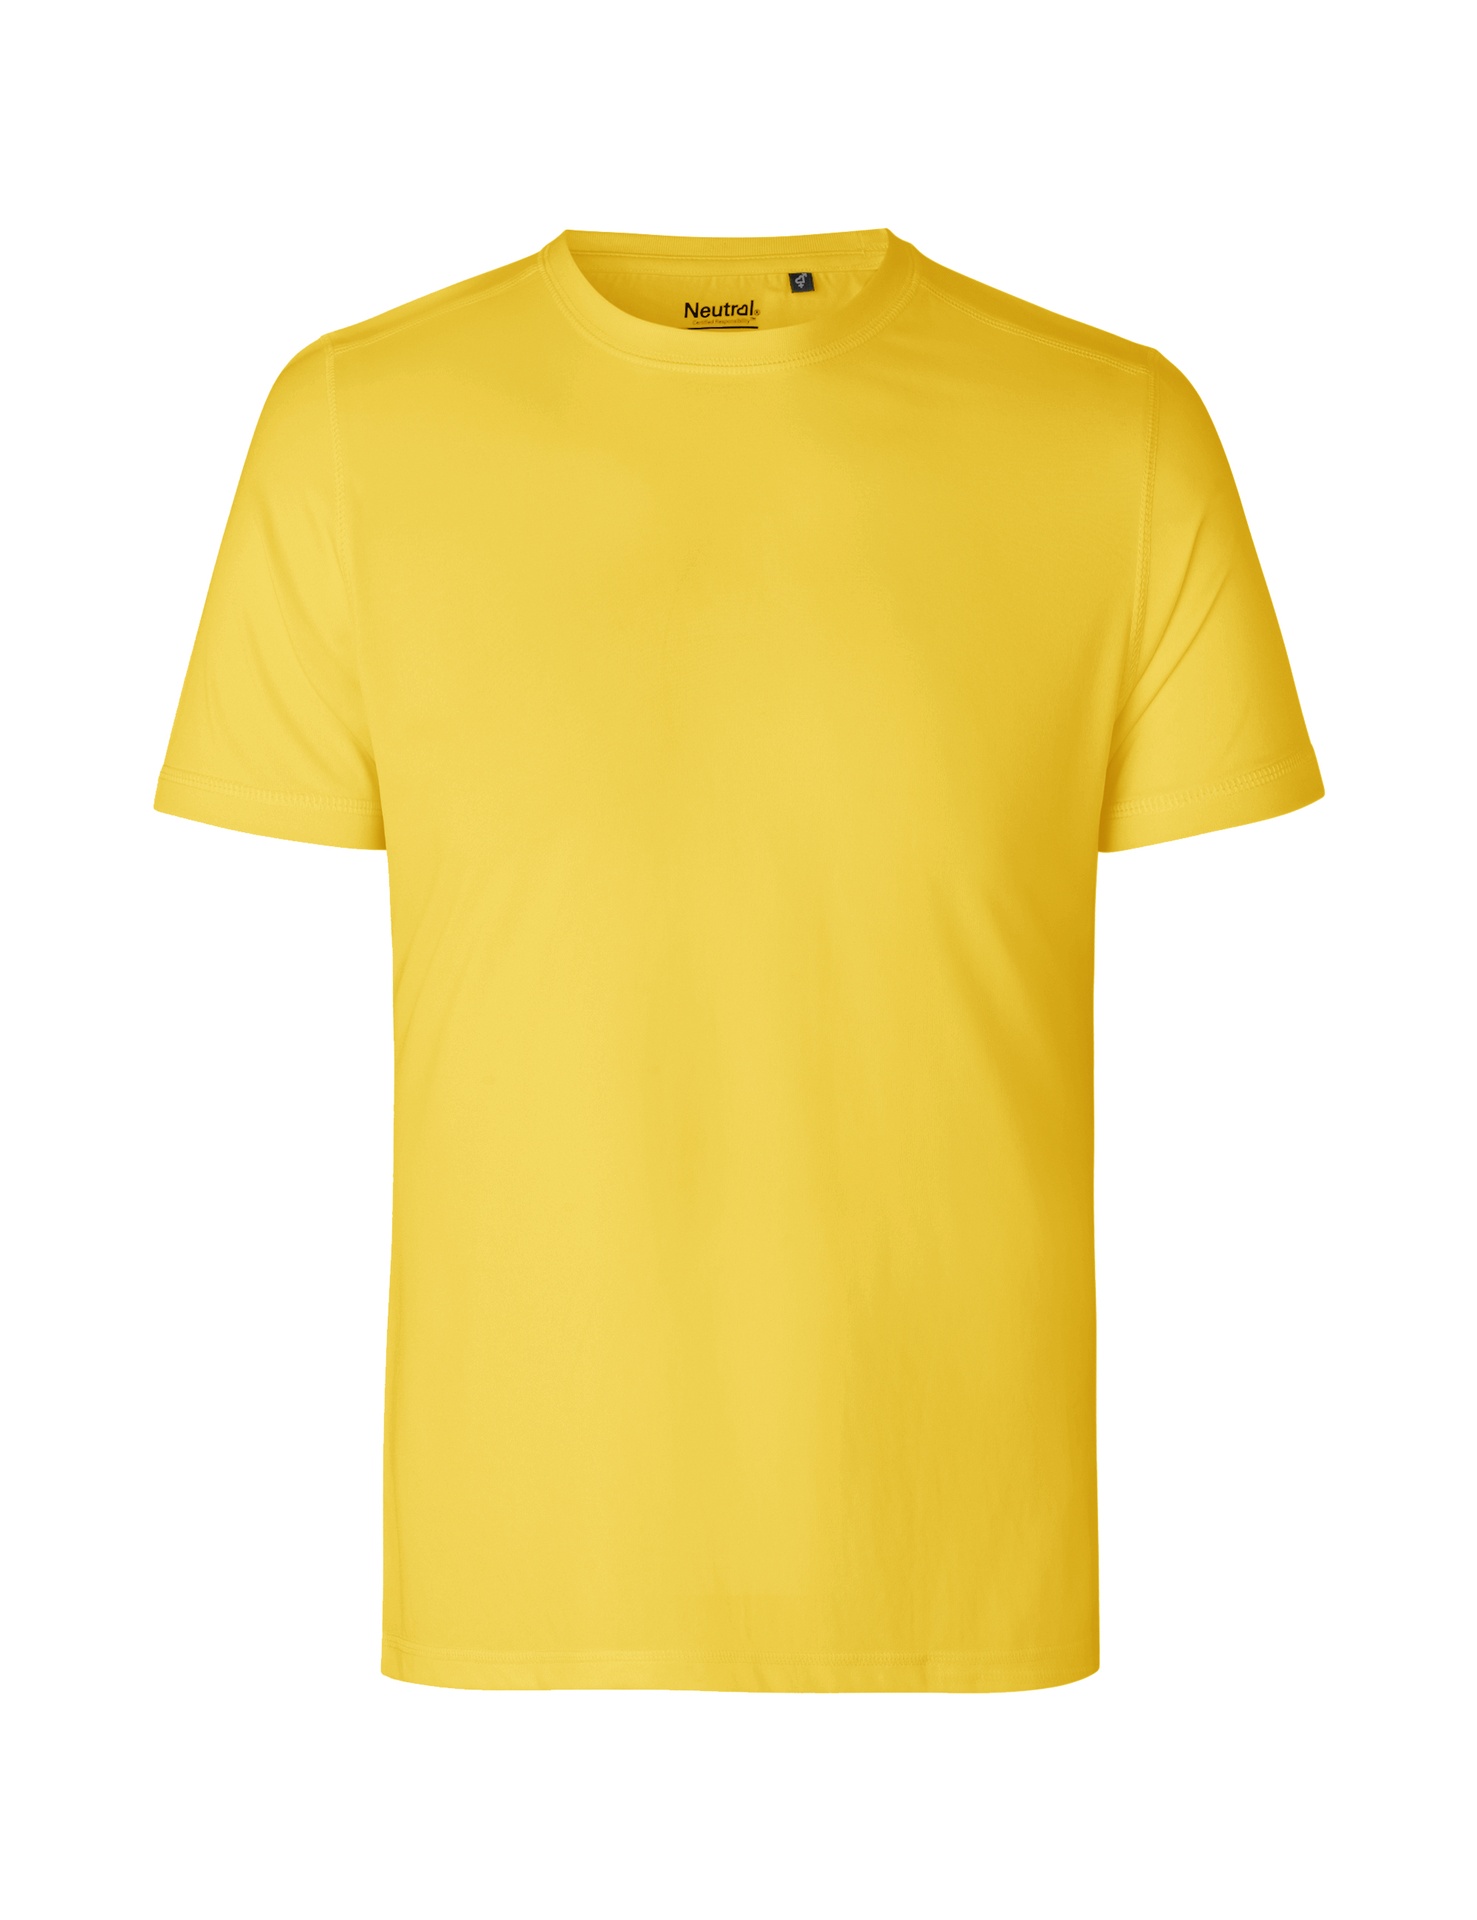 [PR/03816] Recycled Performance T-Shirt (Yellow 98, L)